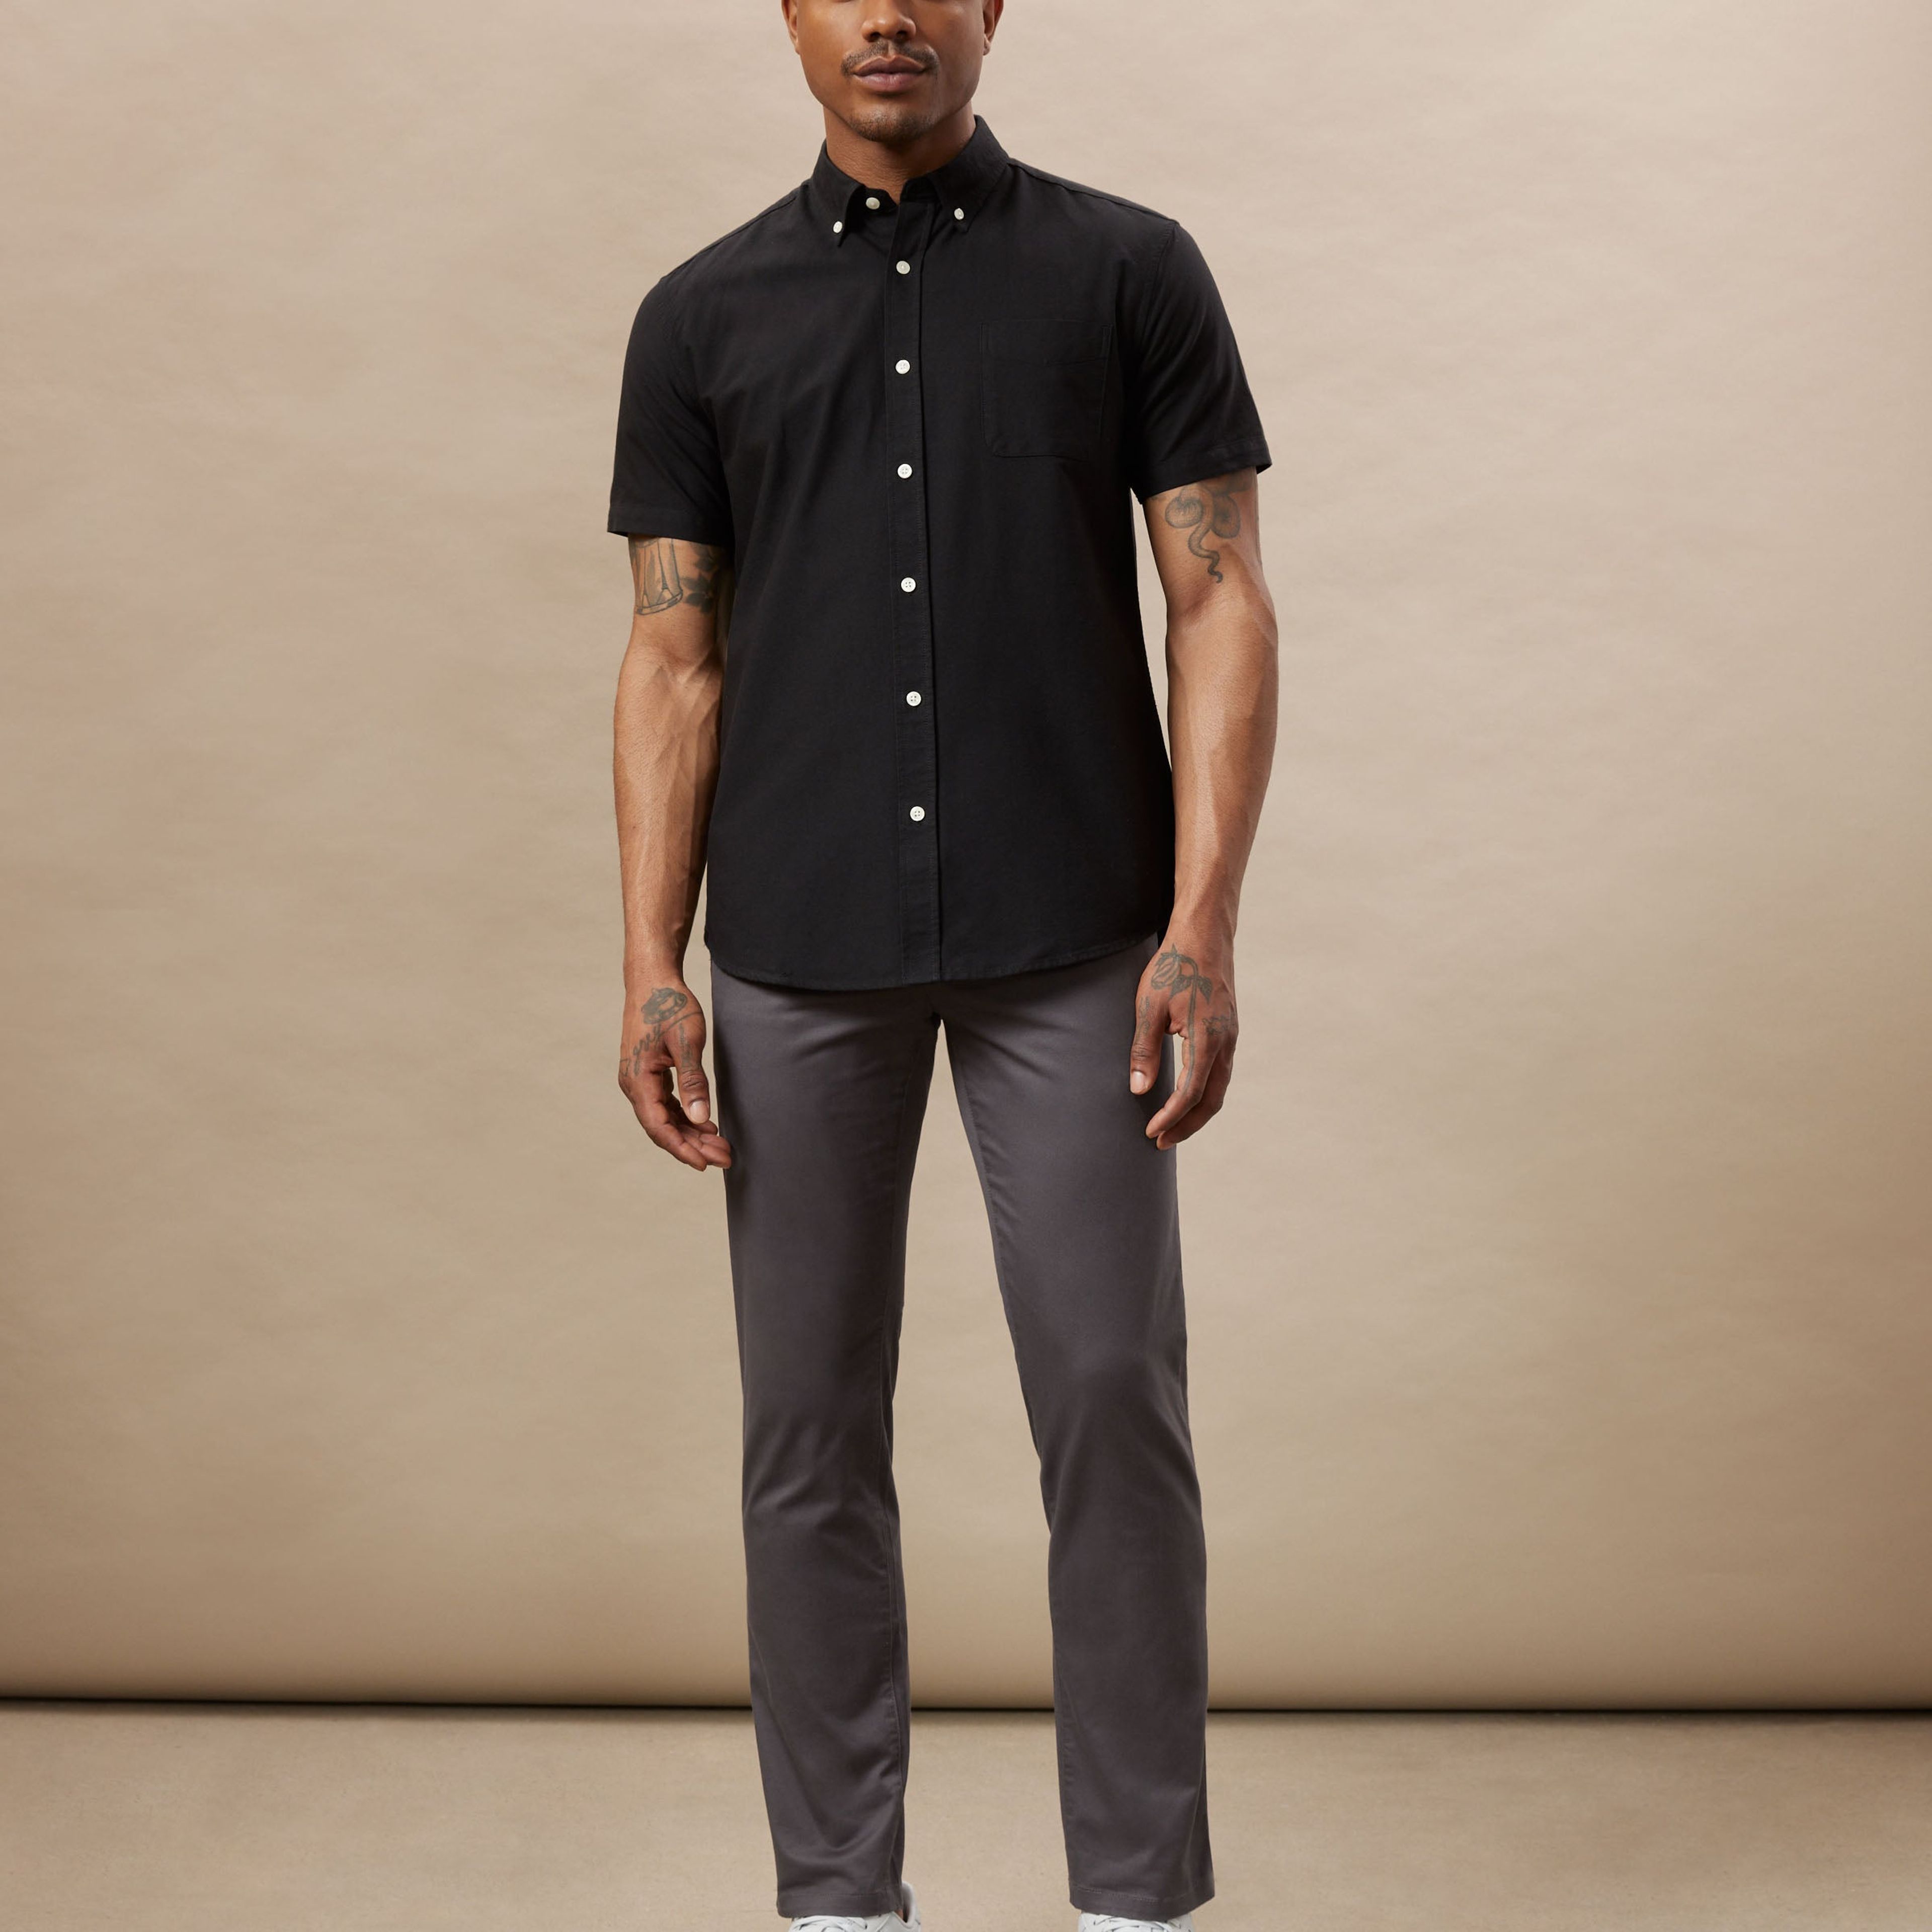 The Jasper Short Sleeve Oxford Shirt in Black